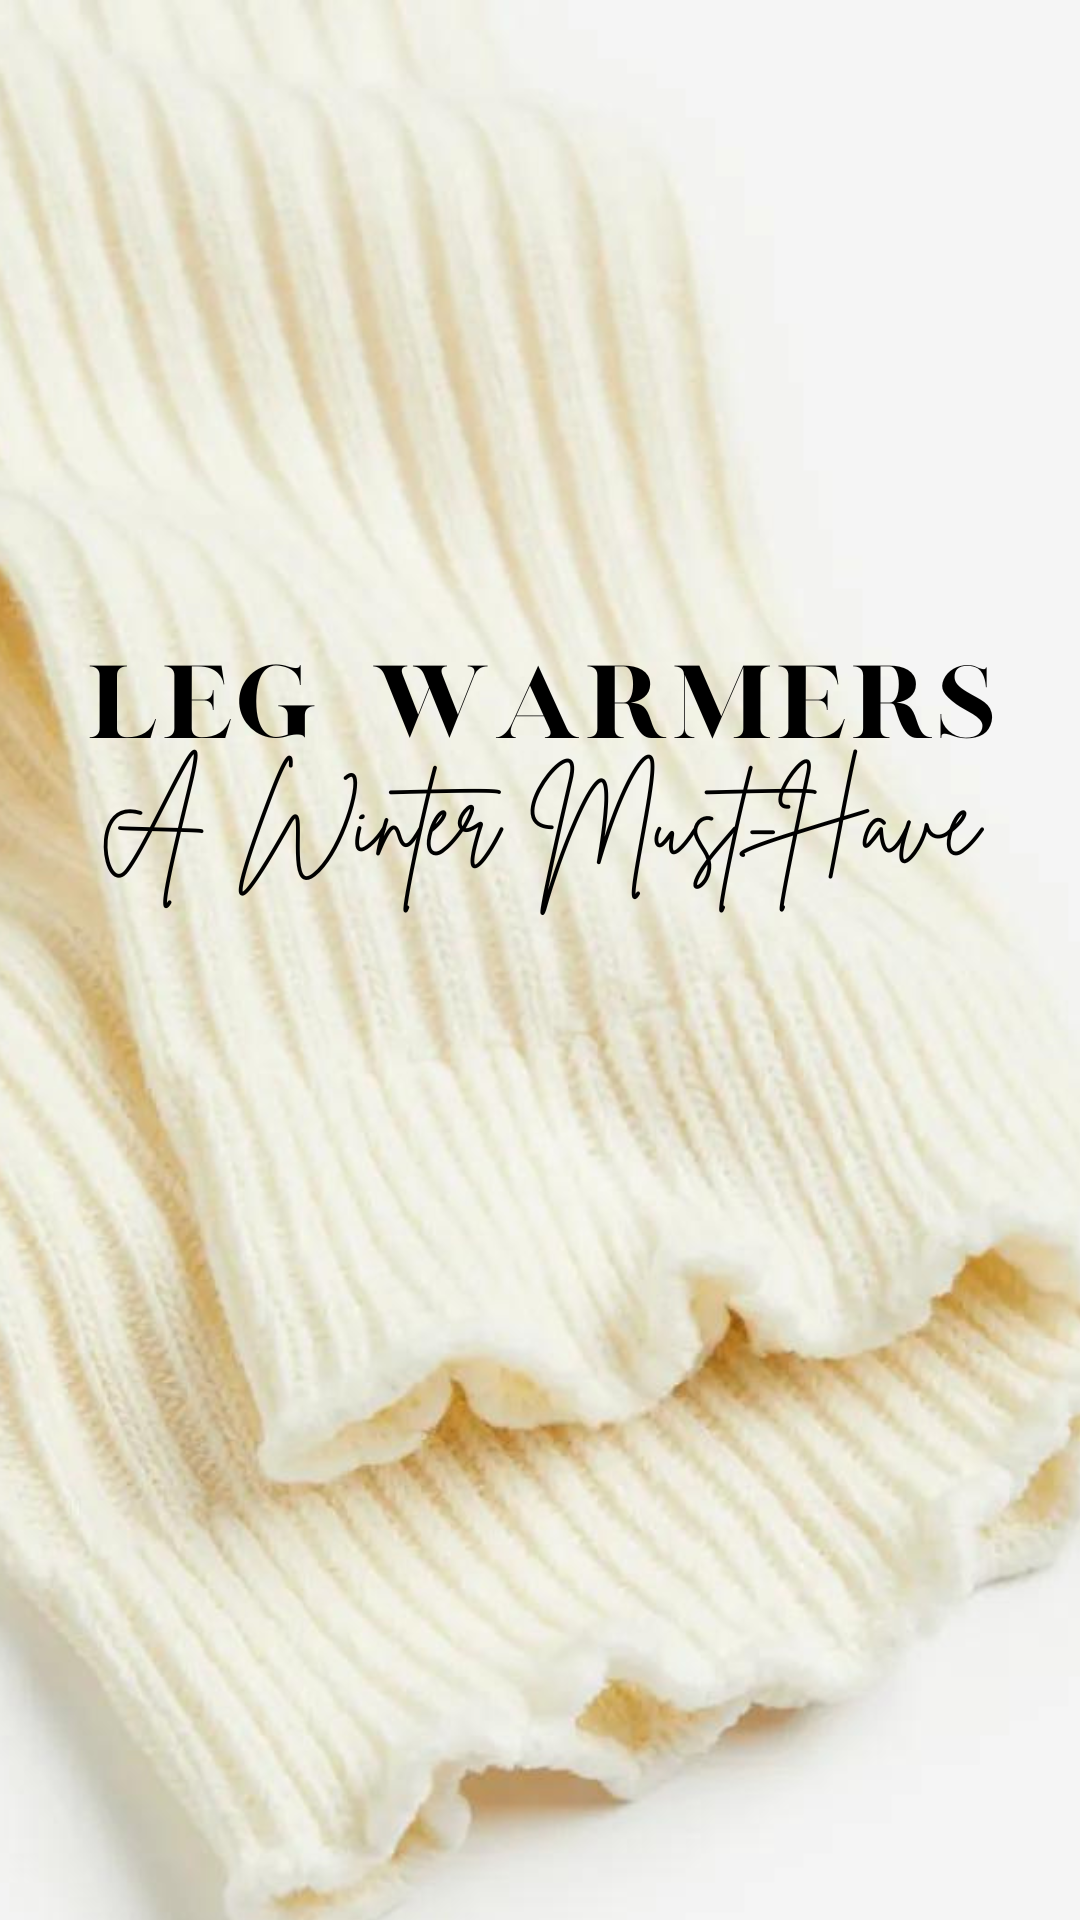 Leg Warmers – A winter staple